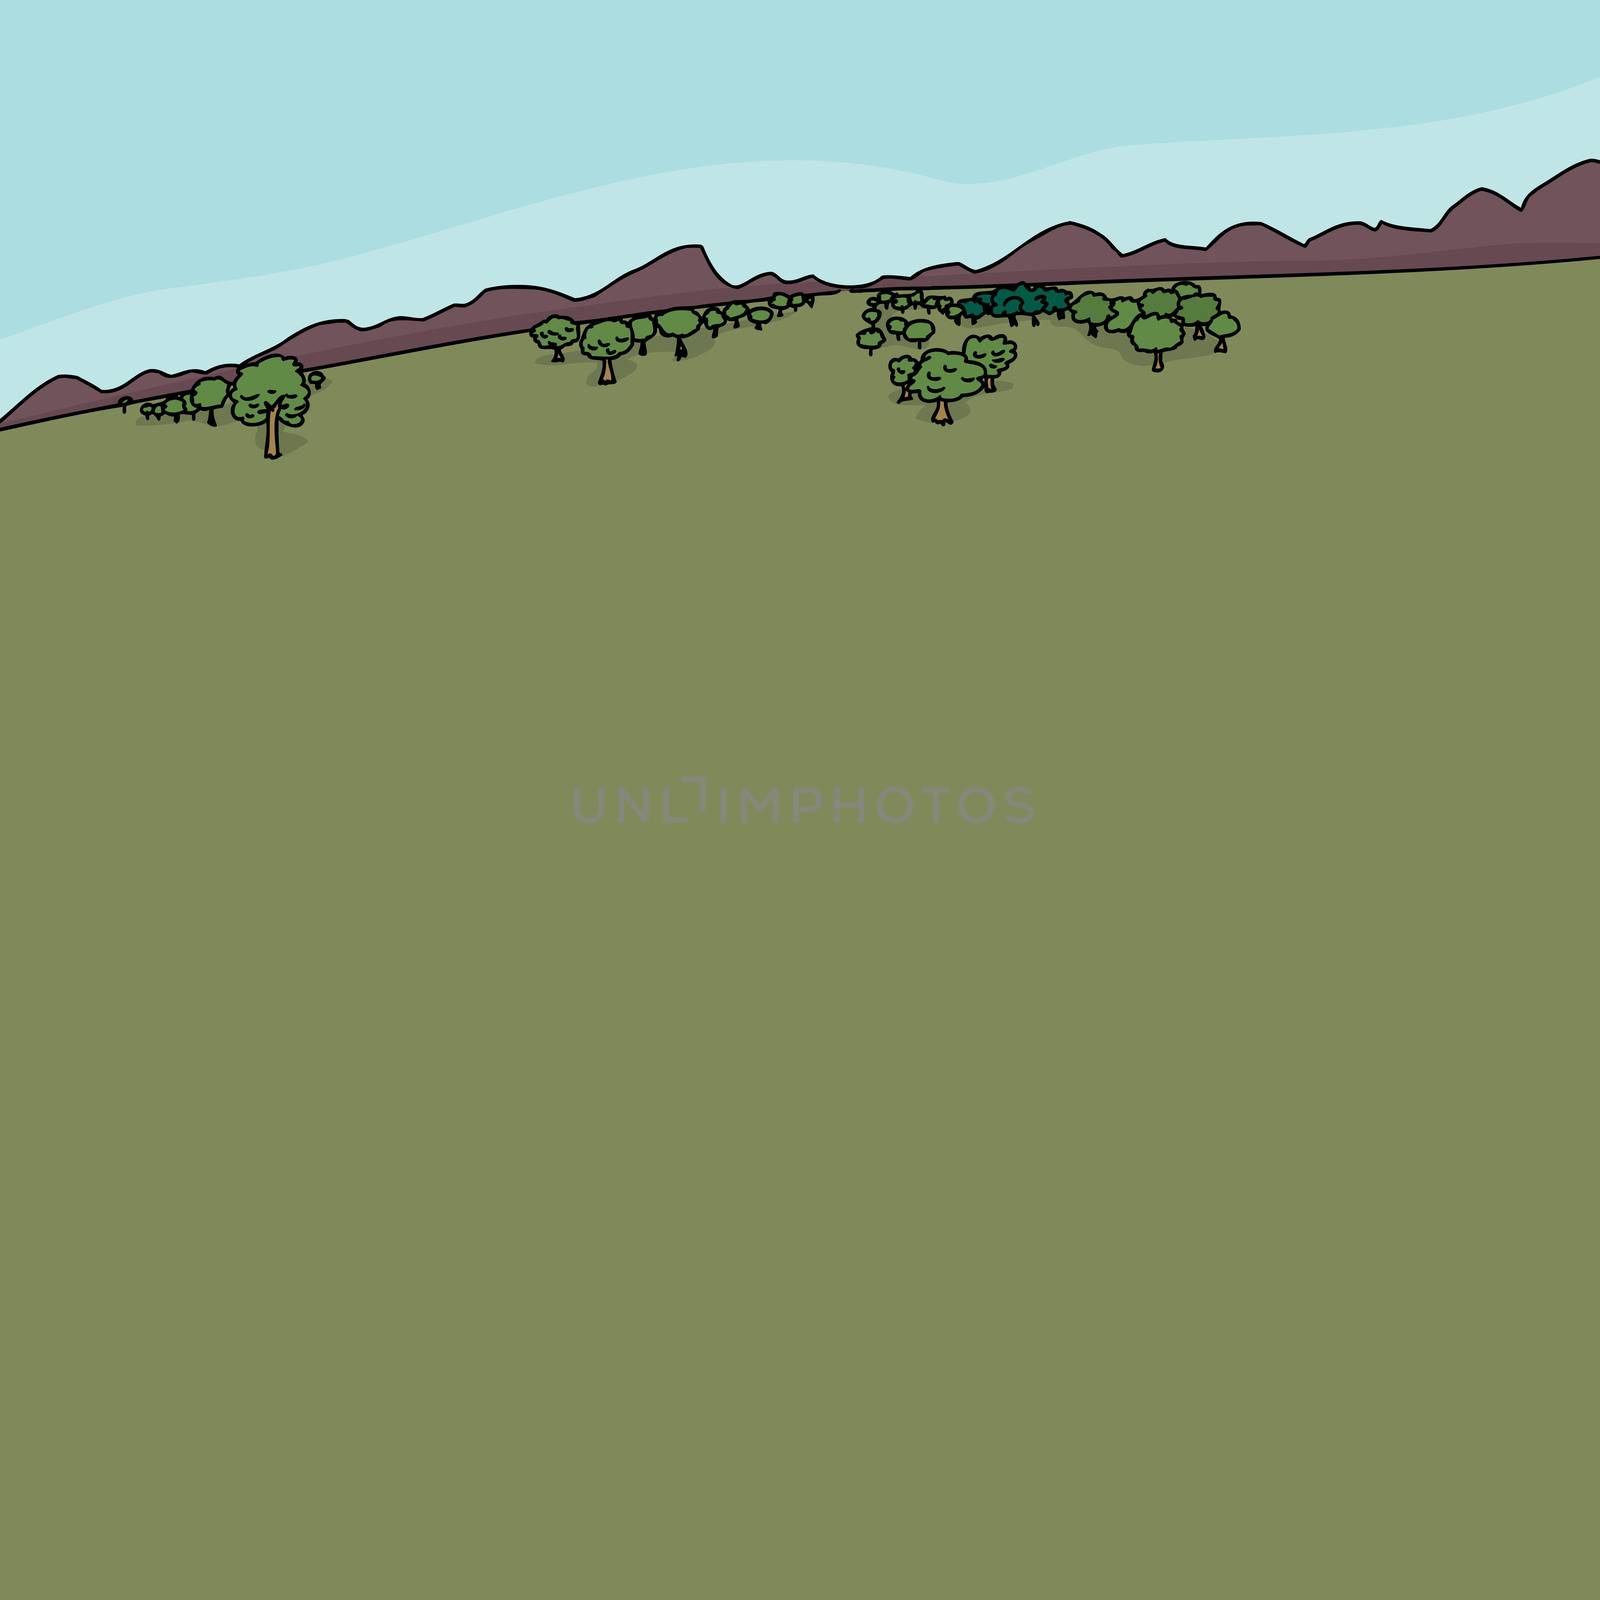 Rural Cartoon Background by TheBlackRhino